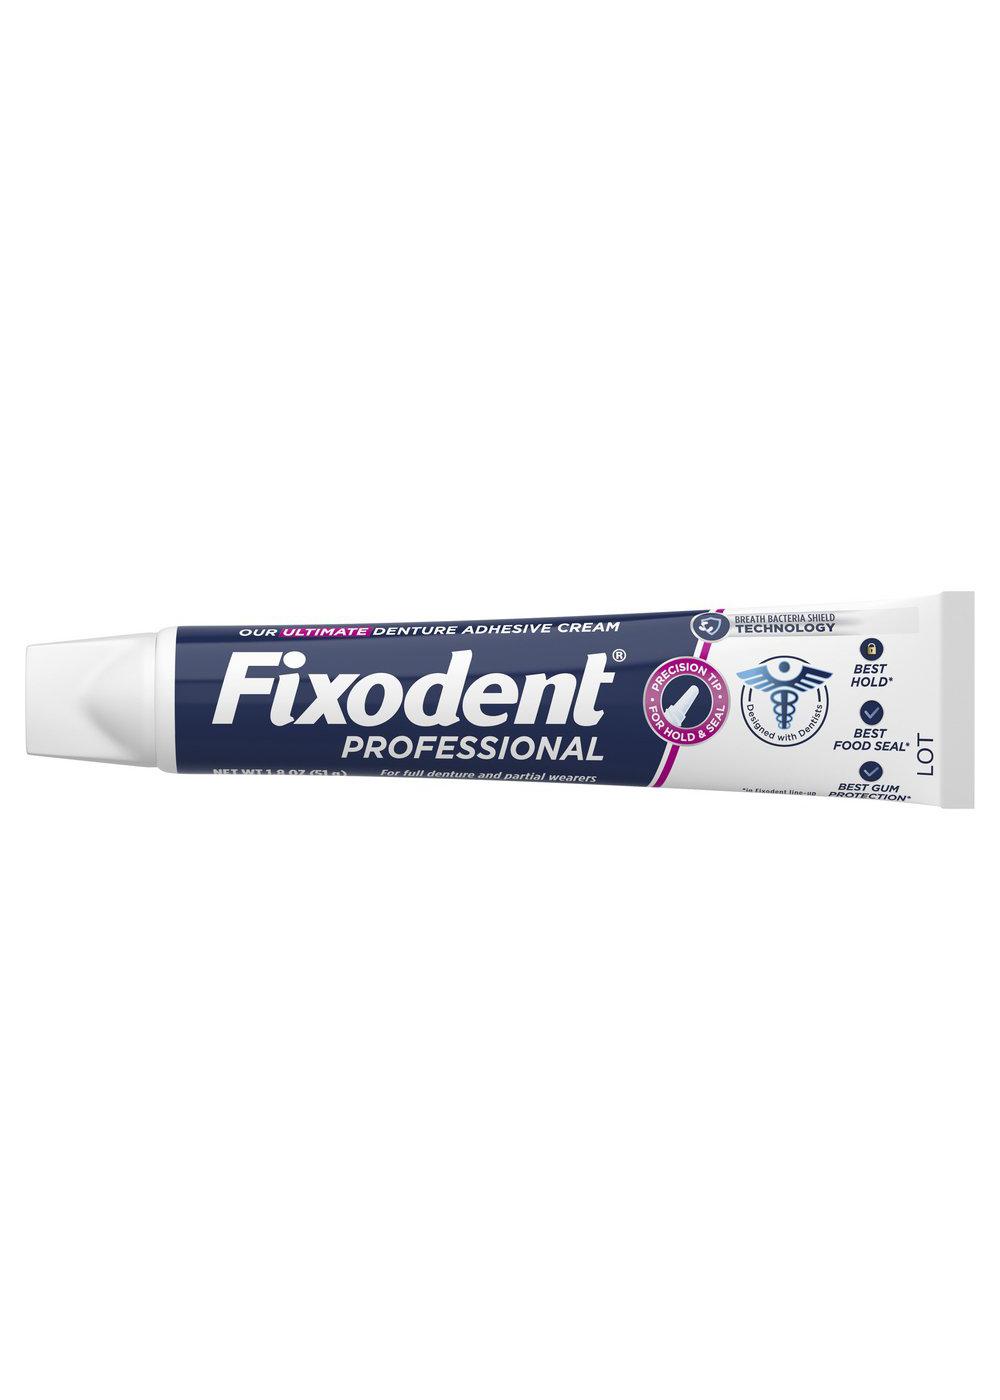 Fixodent Professional Ultimate Denture Adhesive Cream; image 9 of 9